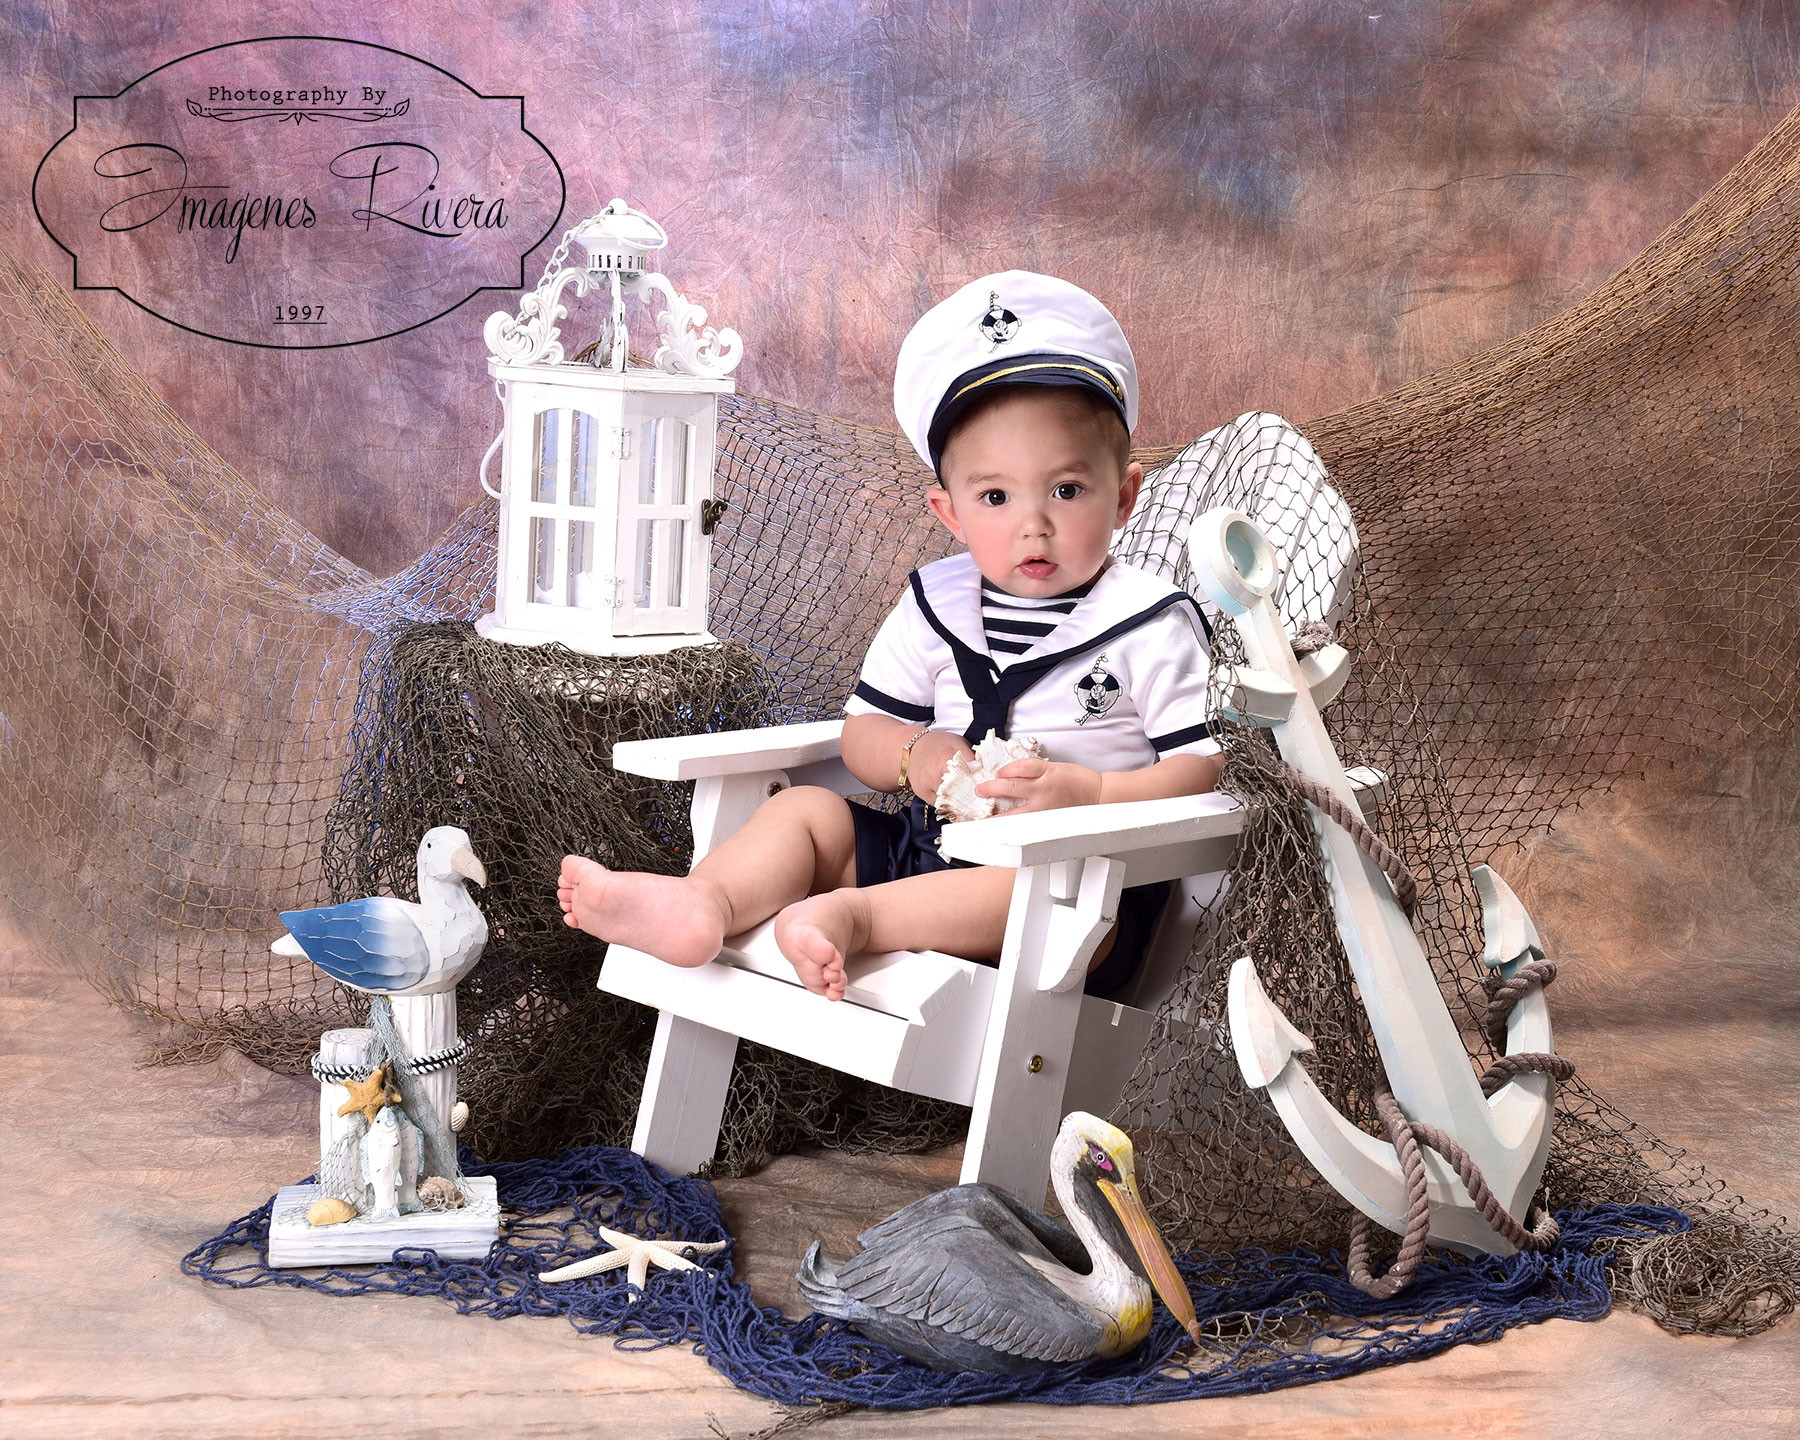 ♥ Happy first year James|Miami baby photographer Imagenes Rivera ♥